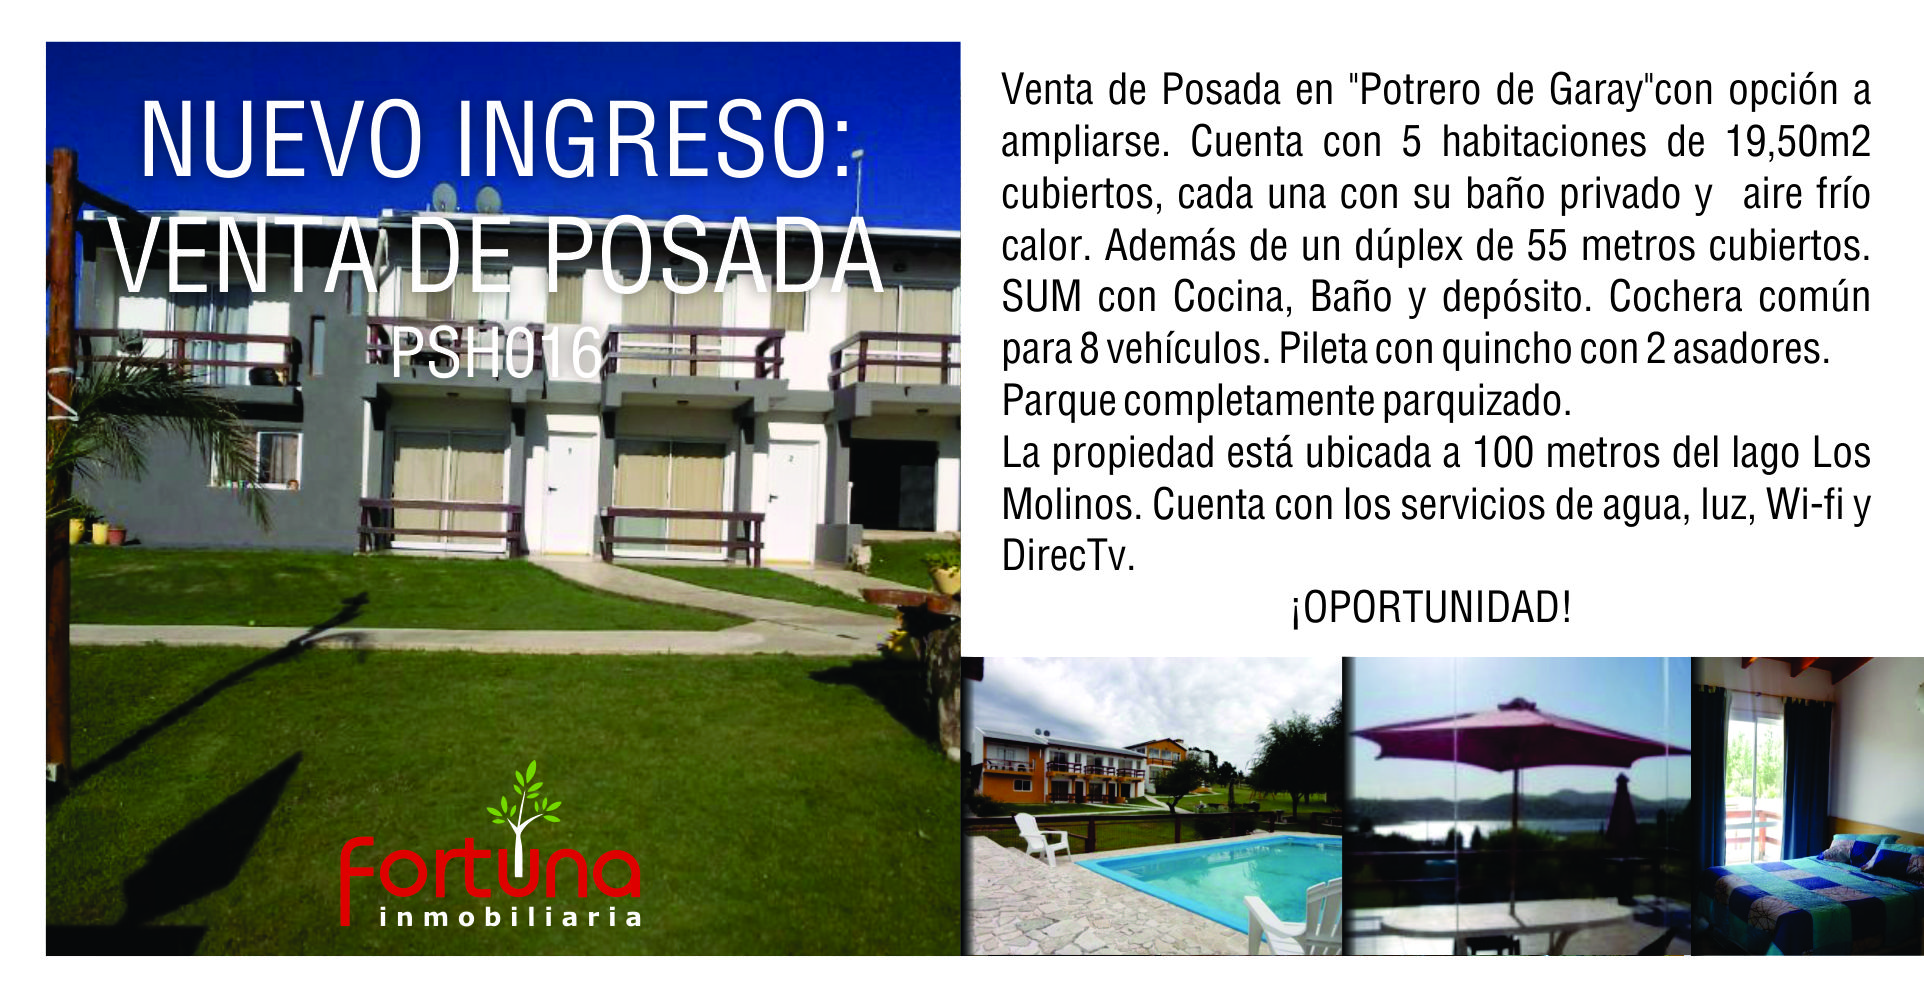 PSH16-PosadaEnVenta-VentaDePosada-FortunaInmobiliaria-PotreroDeGaray-VillaGeneralBelgrano-Inmobiliaria